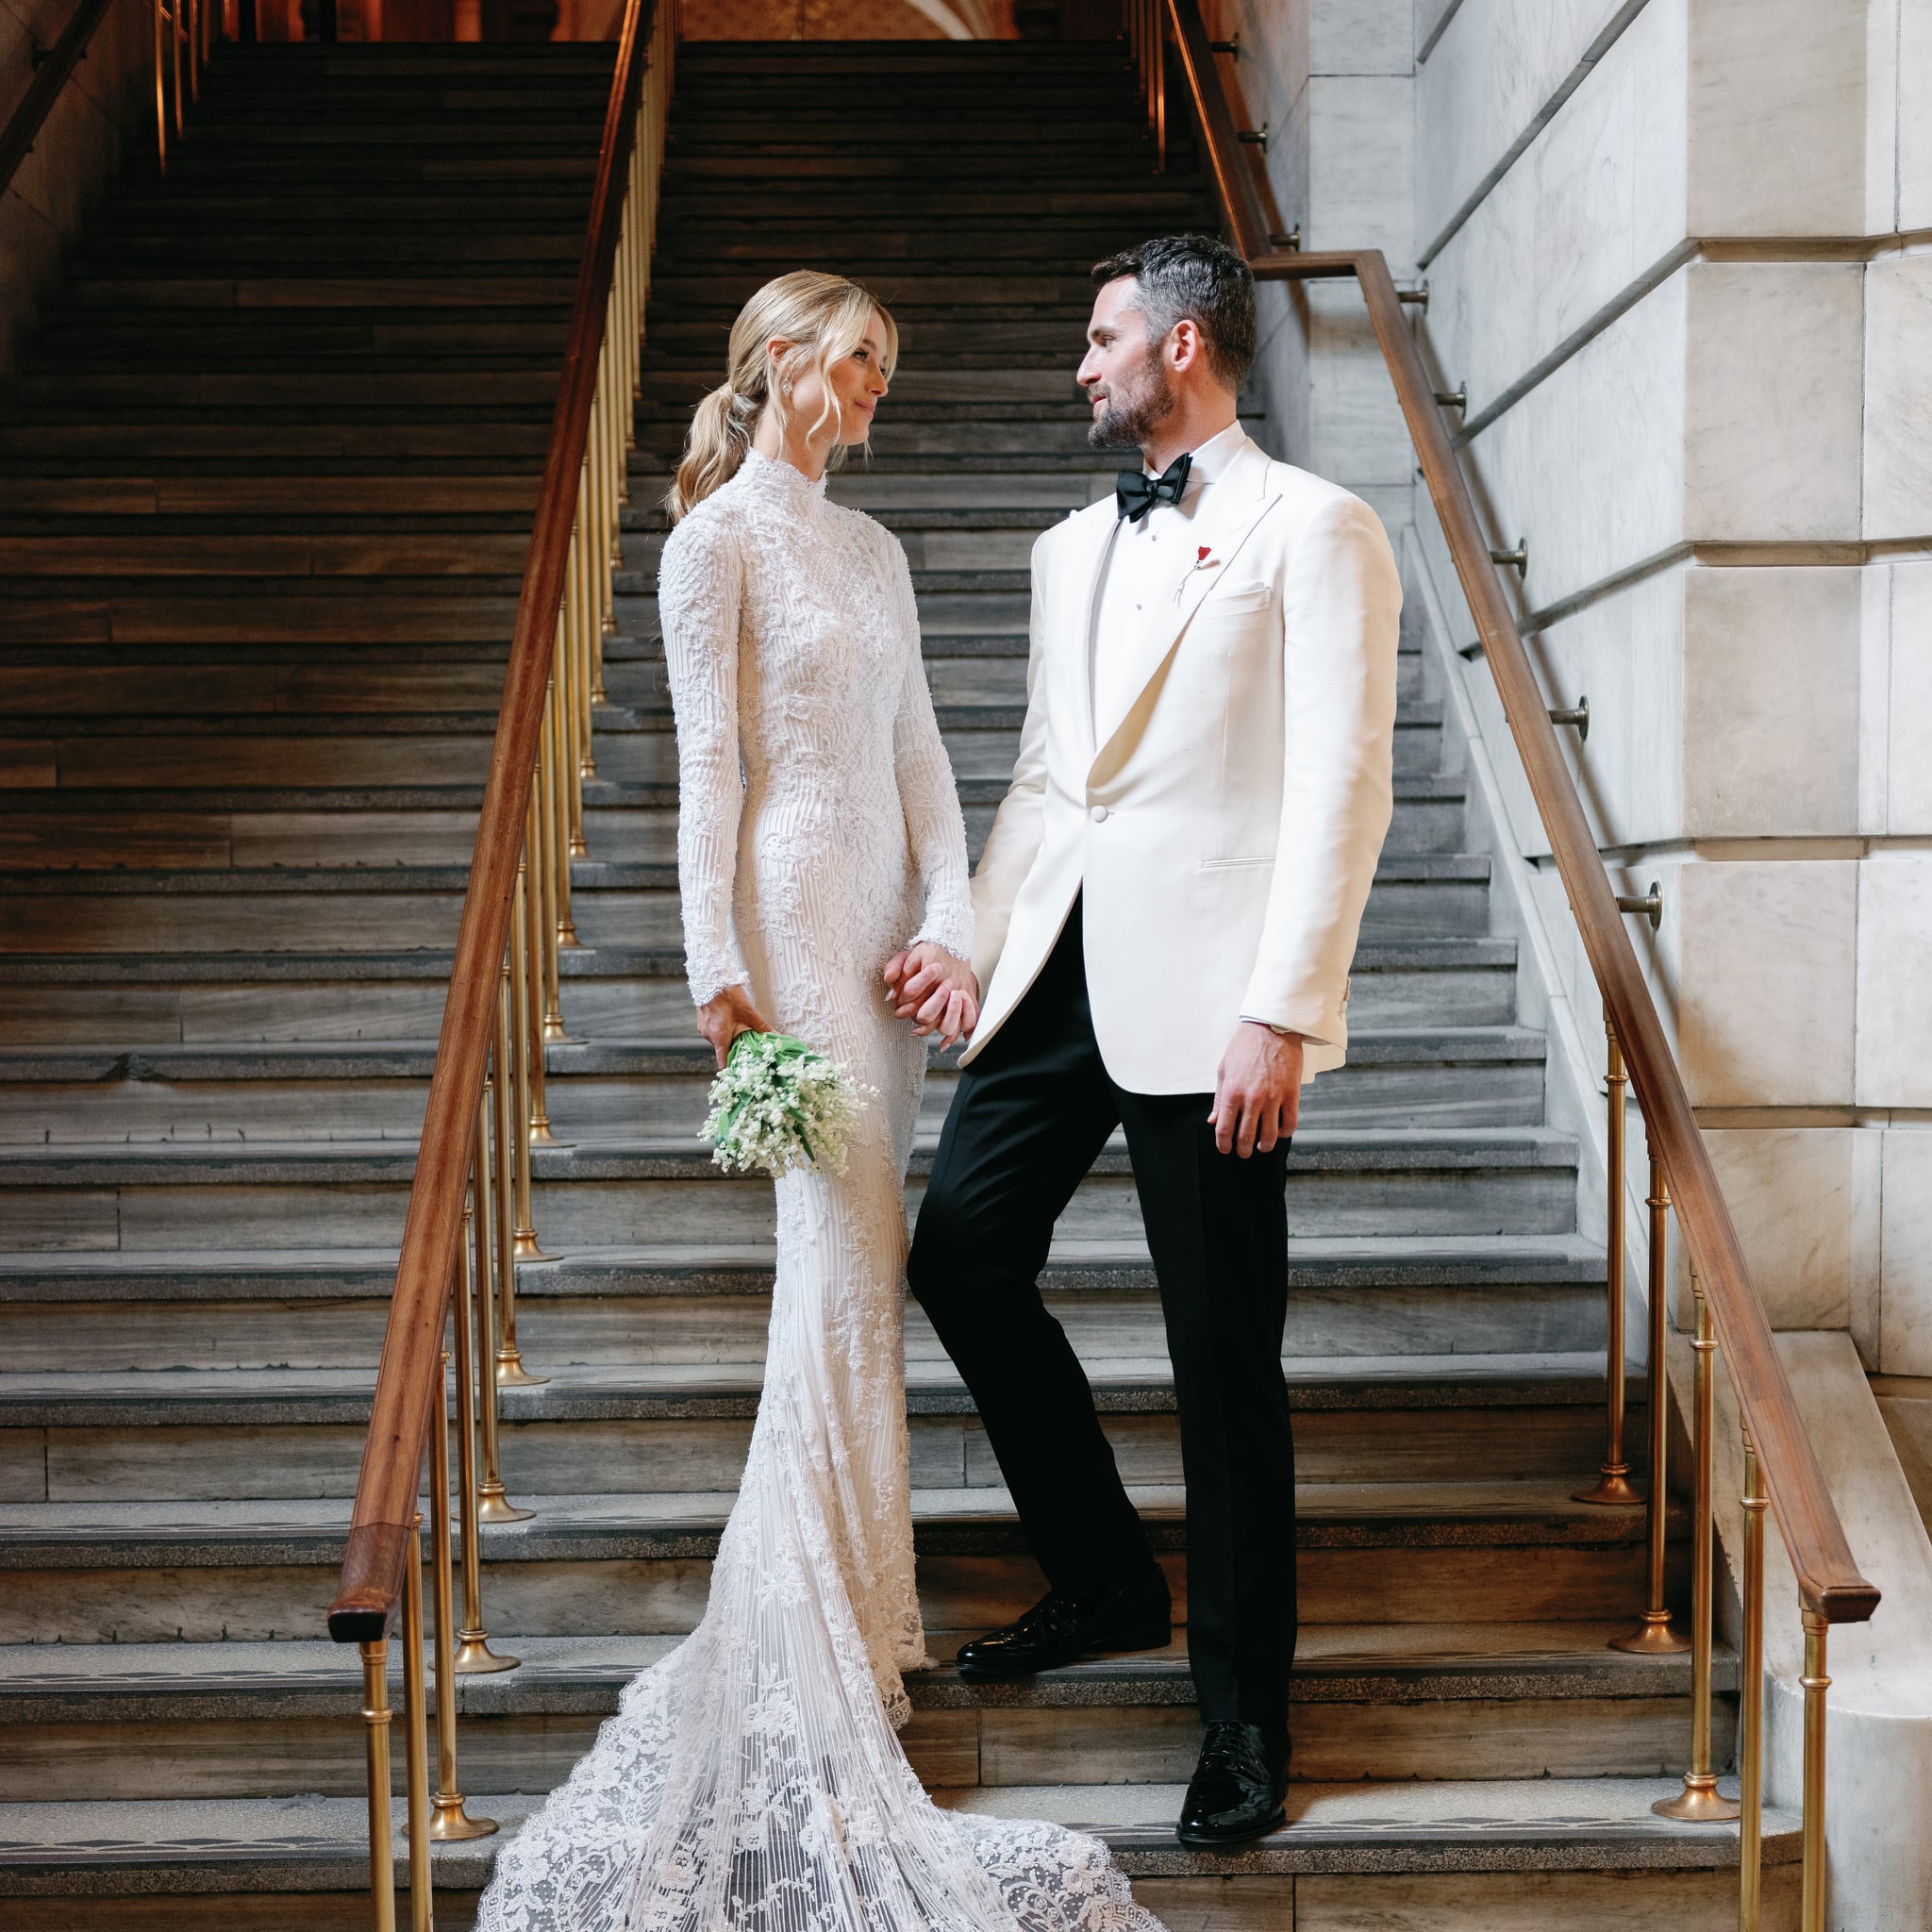 Kate Bock's Ralph Lauren Wedding Dress | POPSUGAR Fashion